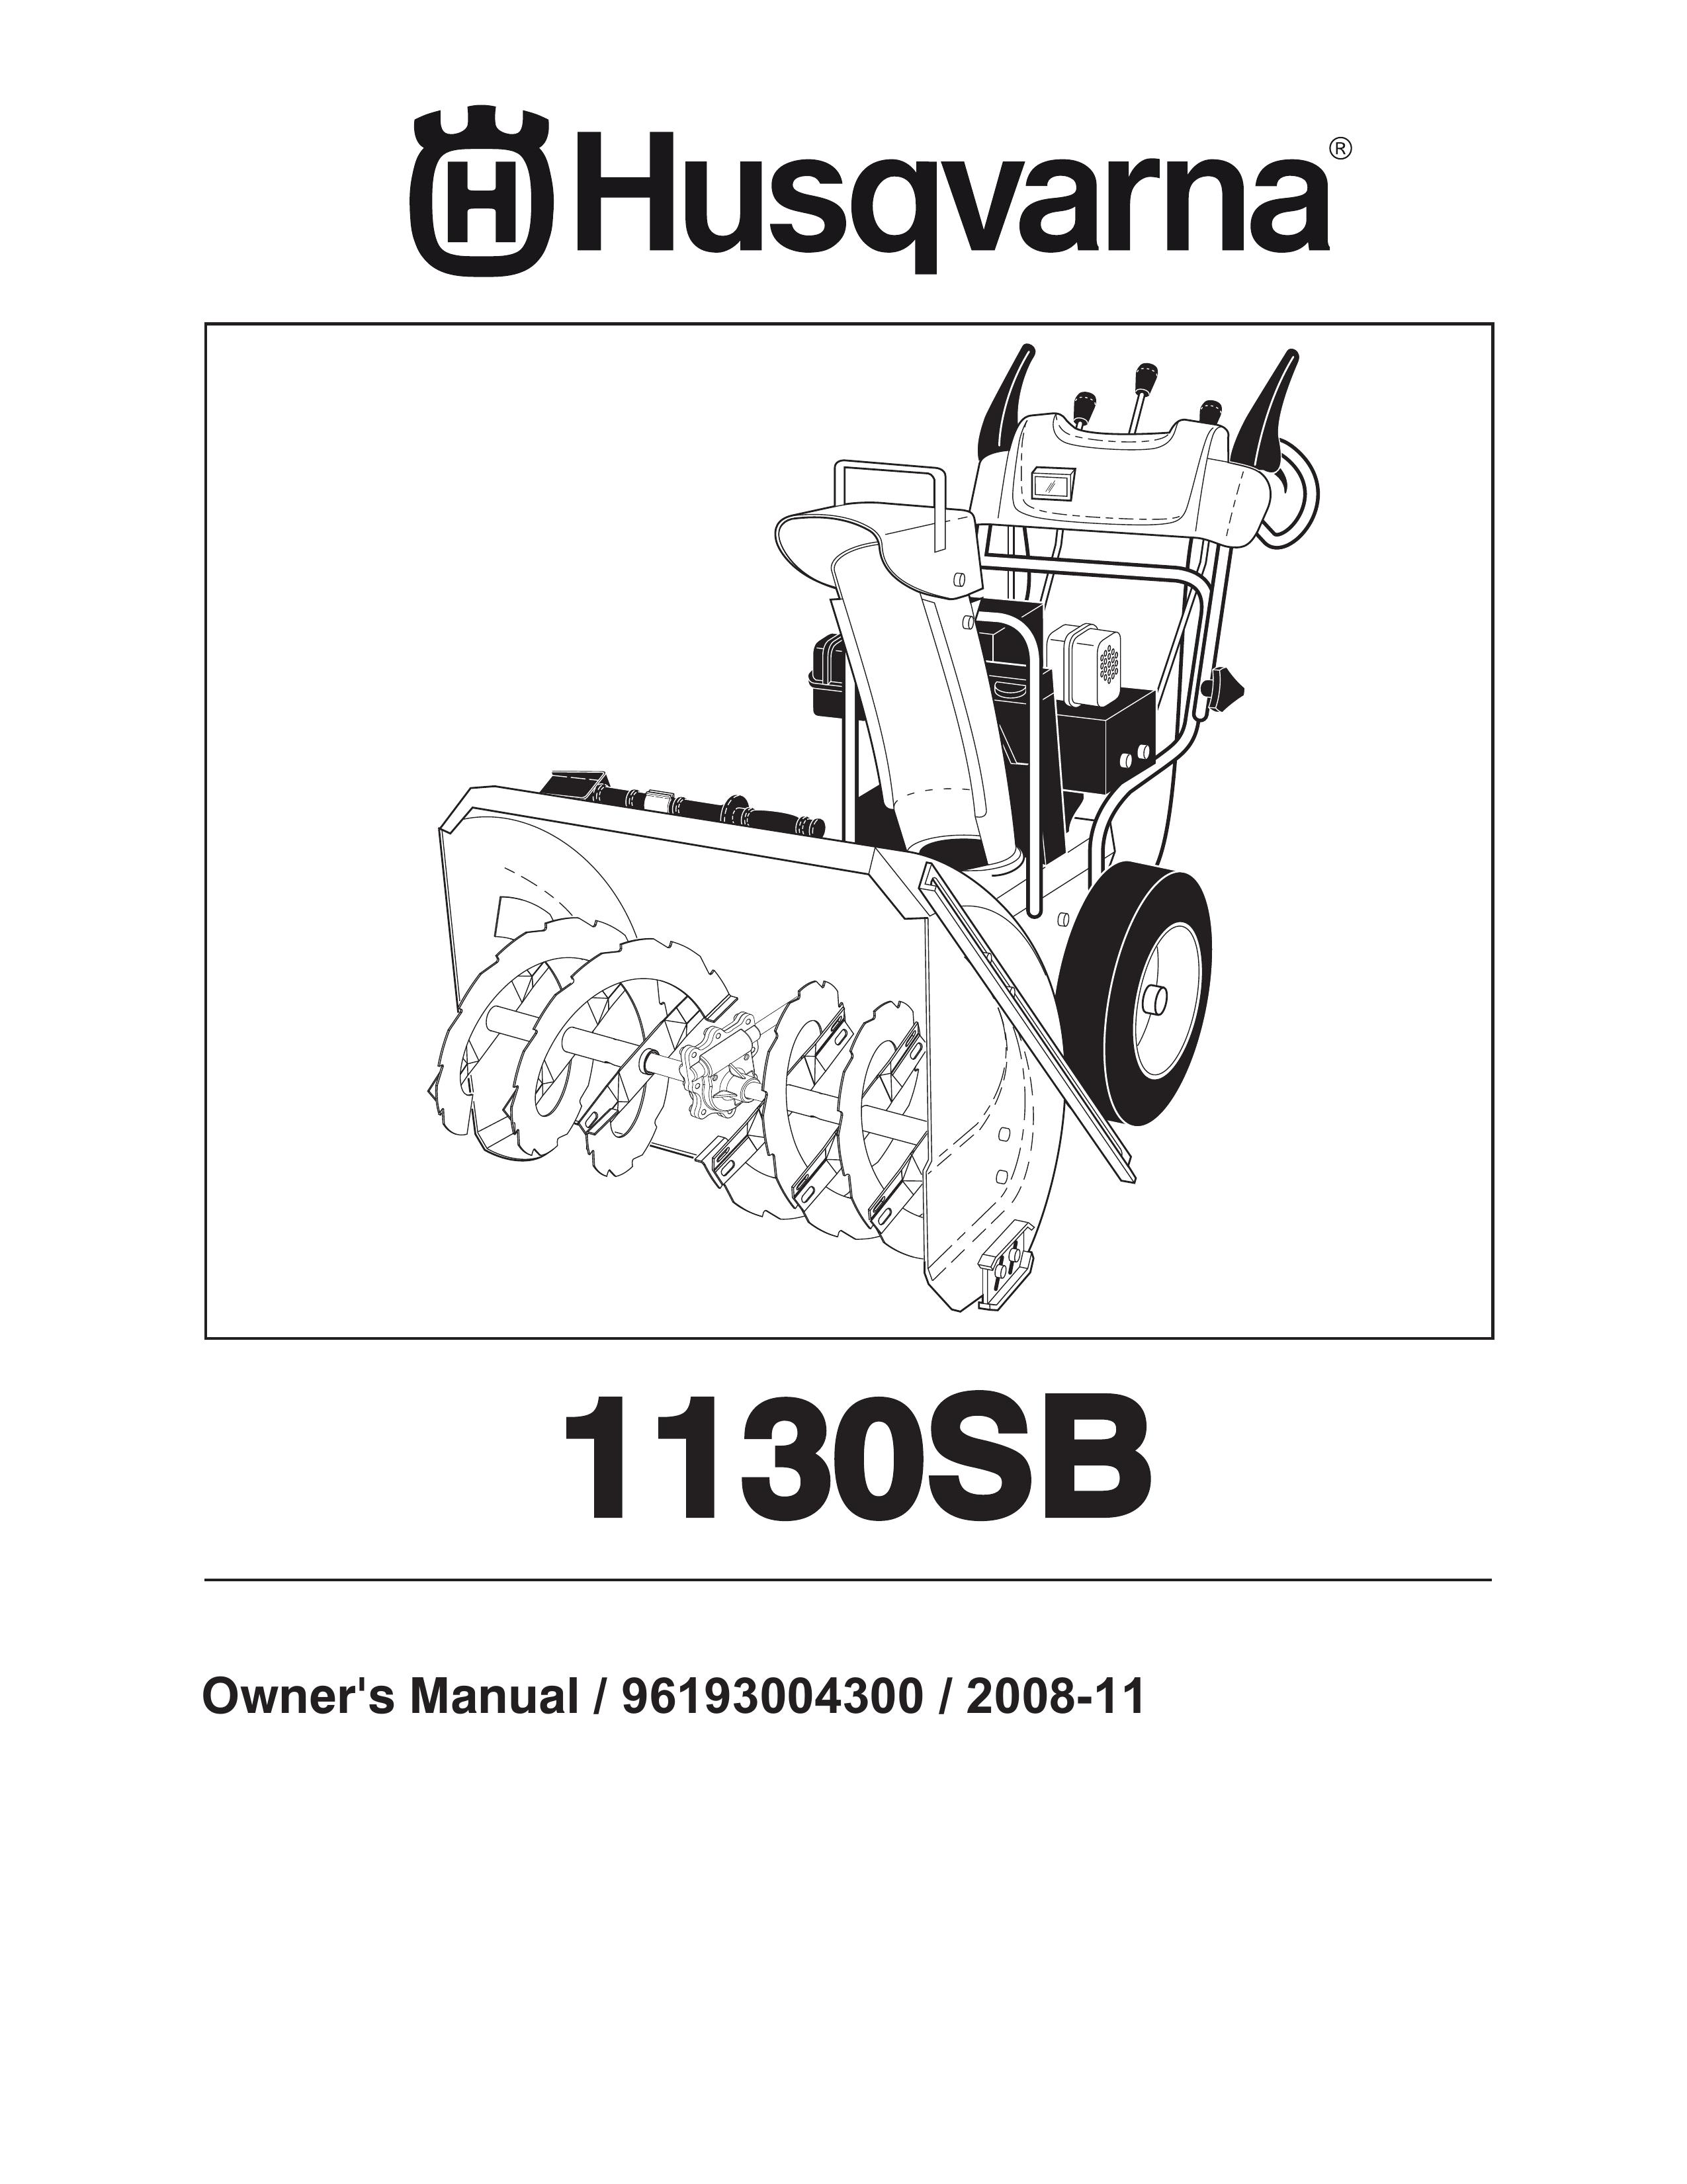 Husqvarna 1130SB Snow Blower User Manual